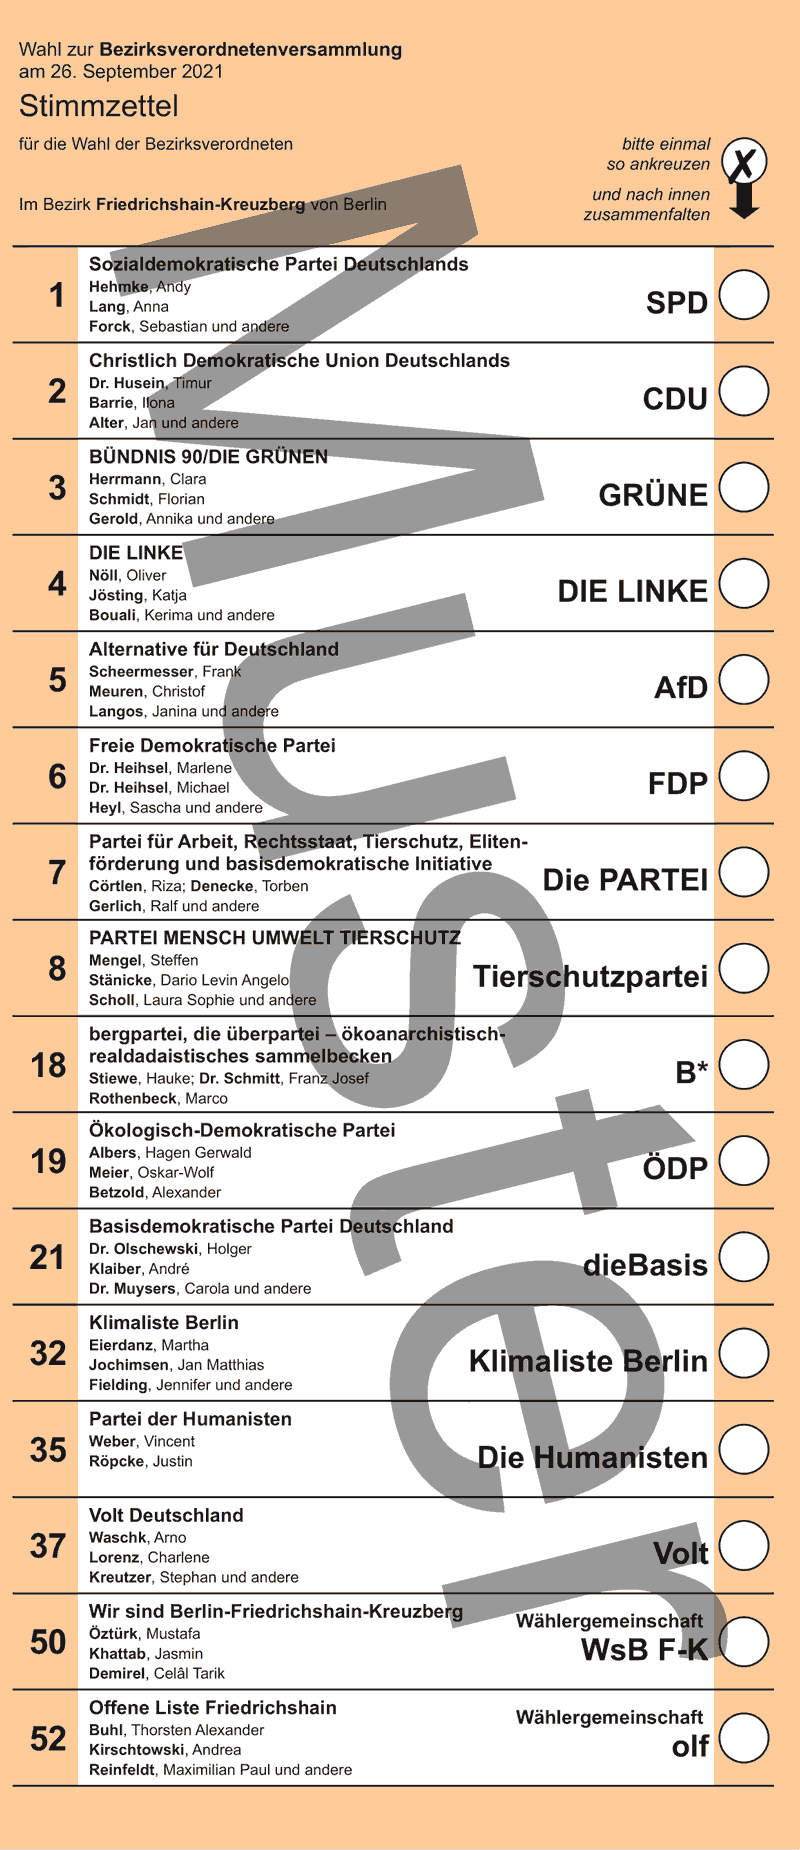 Stimmzettel BVV-Wahl Friedrichshain-Kreuzberg